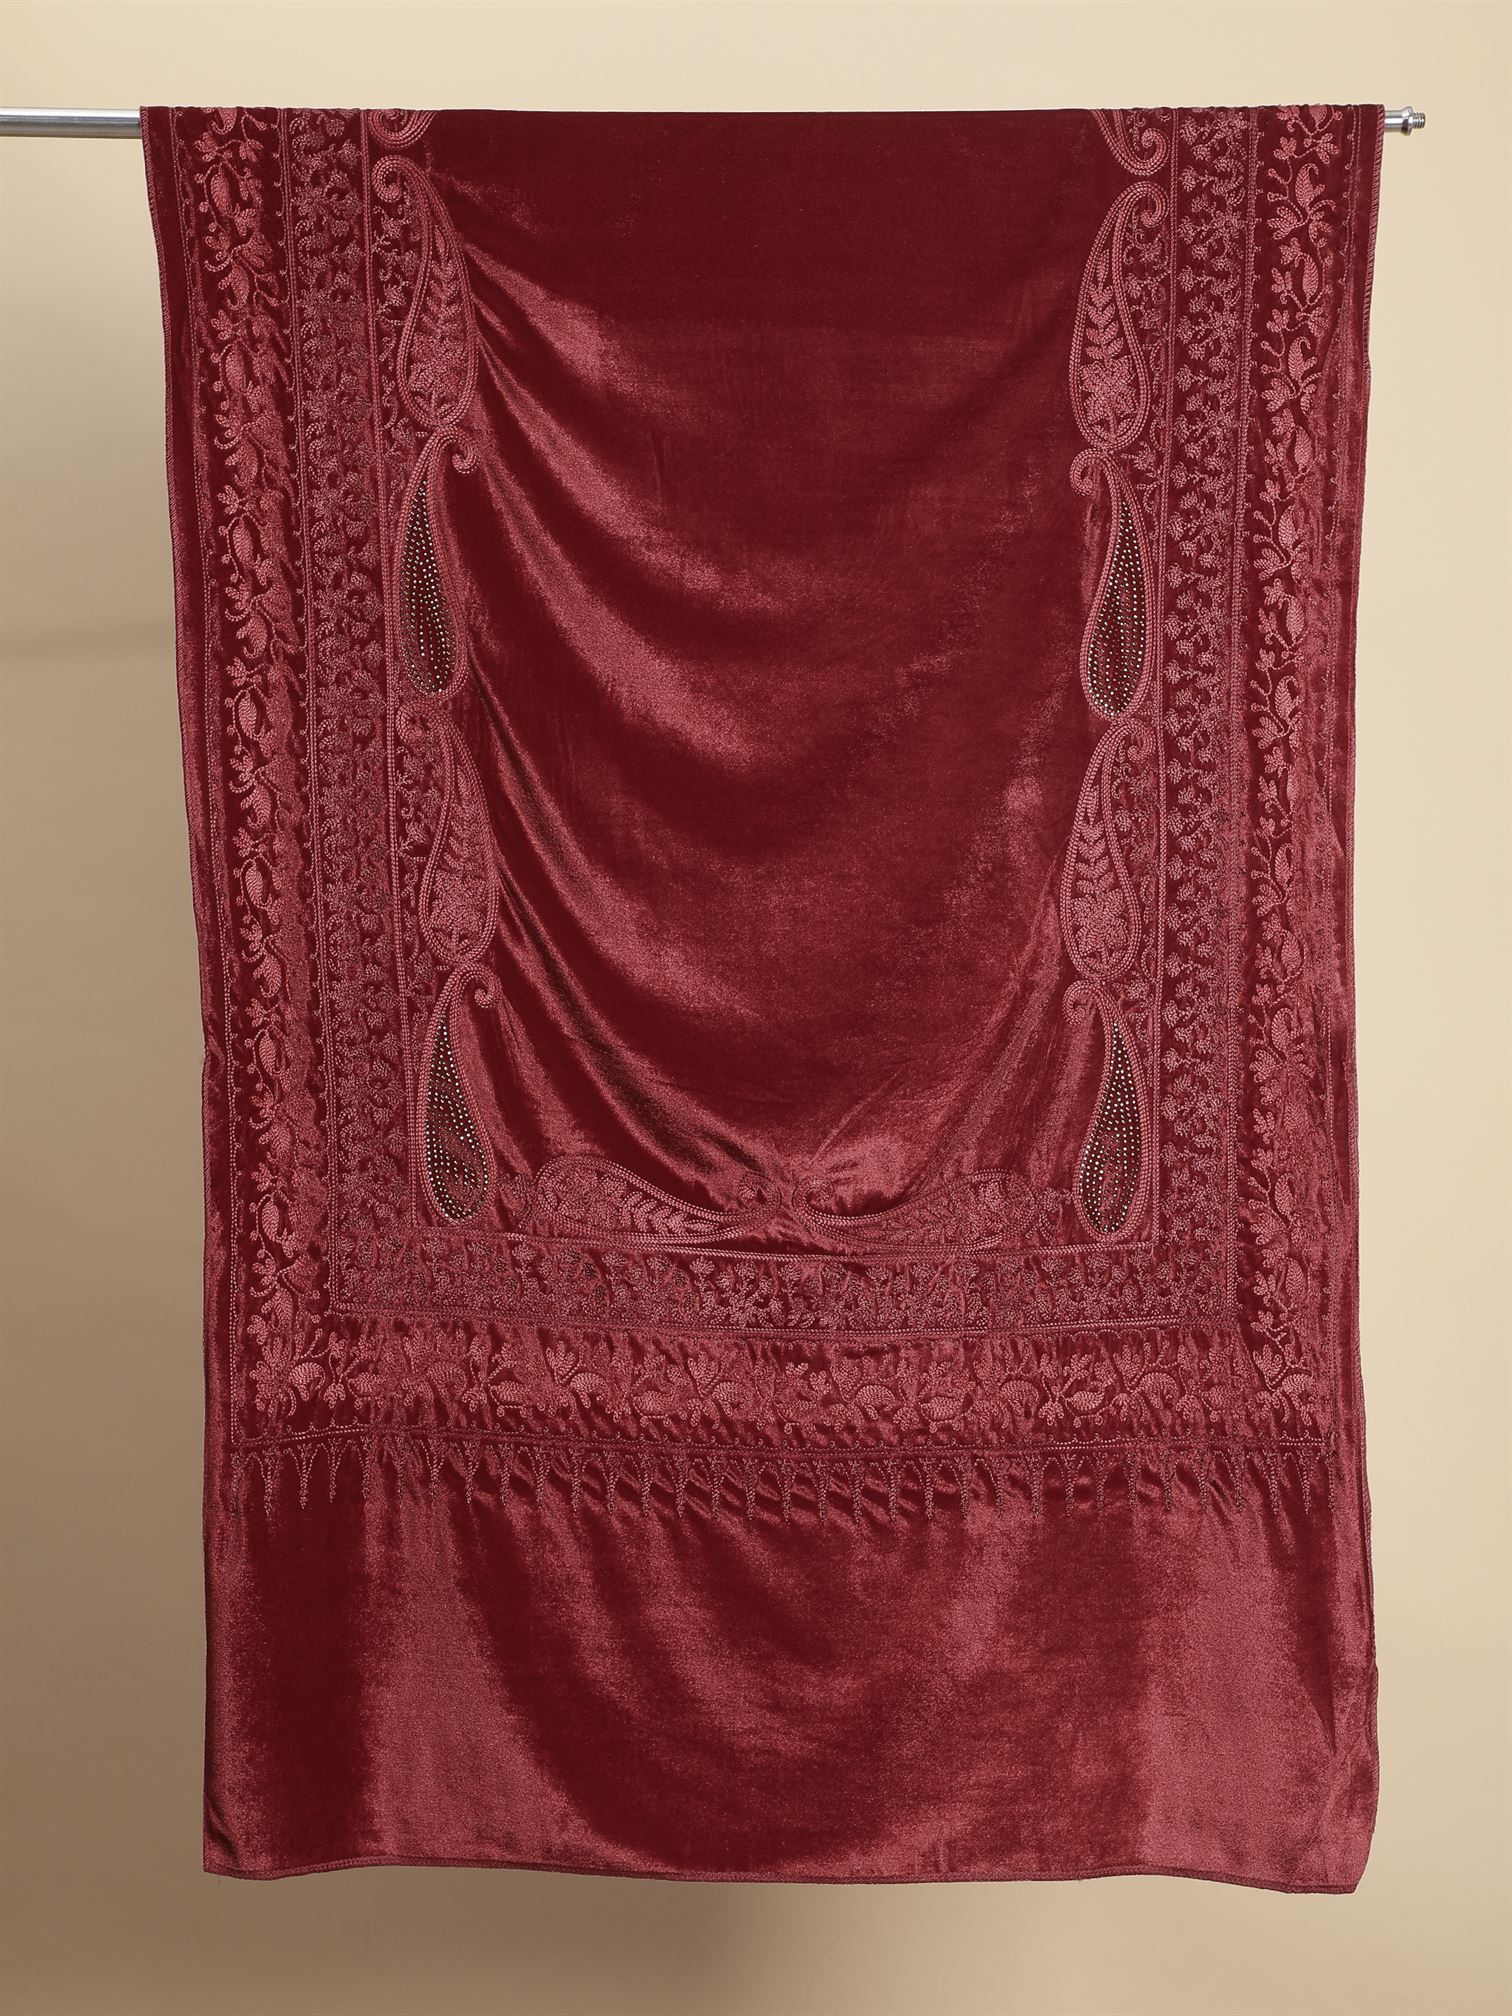 maroon-embroidered-velvet-shawl-mchsvd1645-moda-chales-6